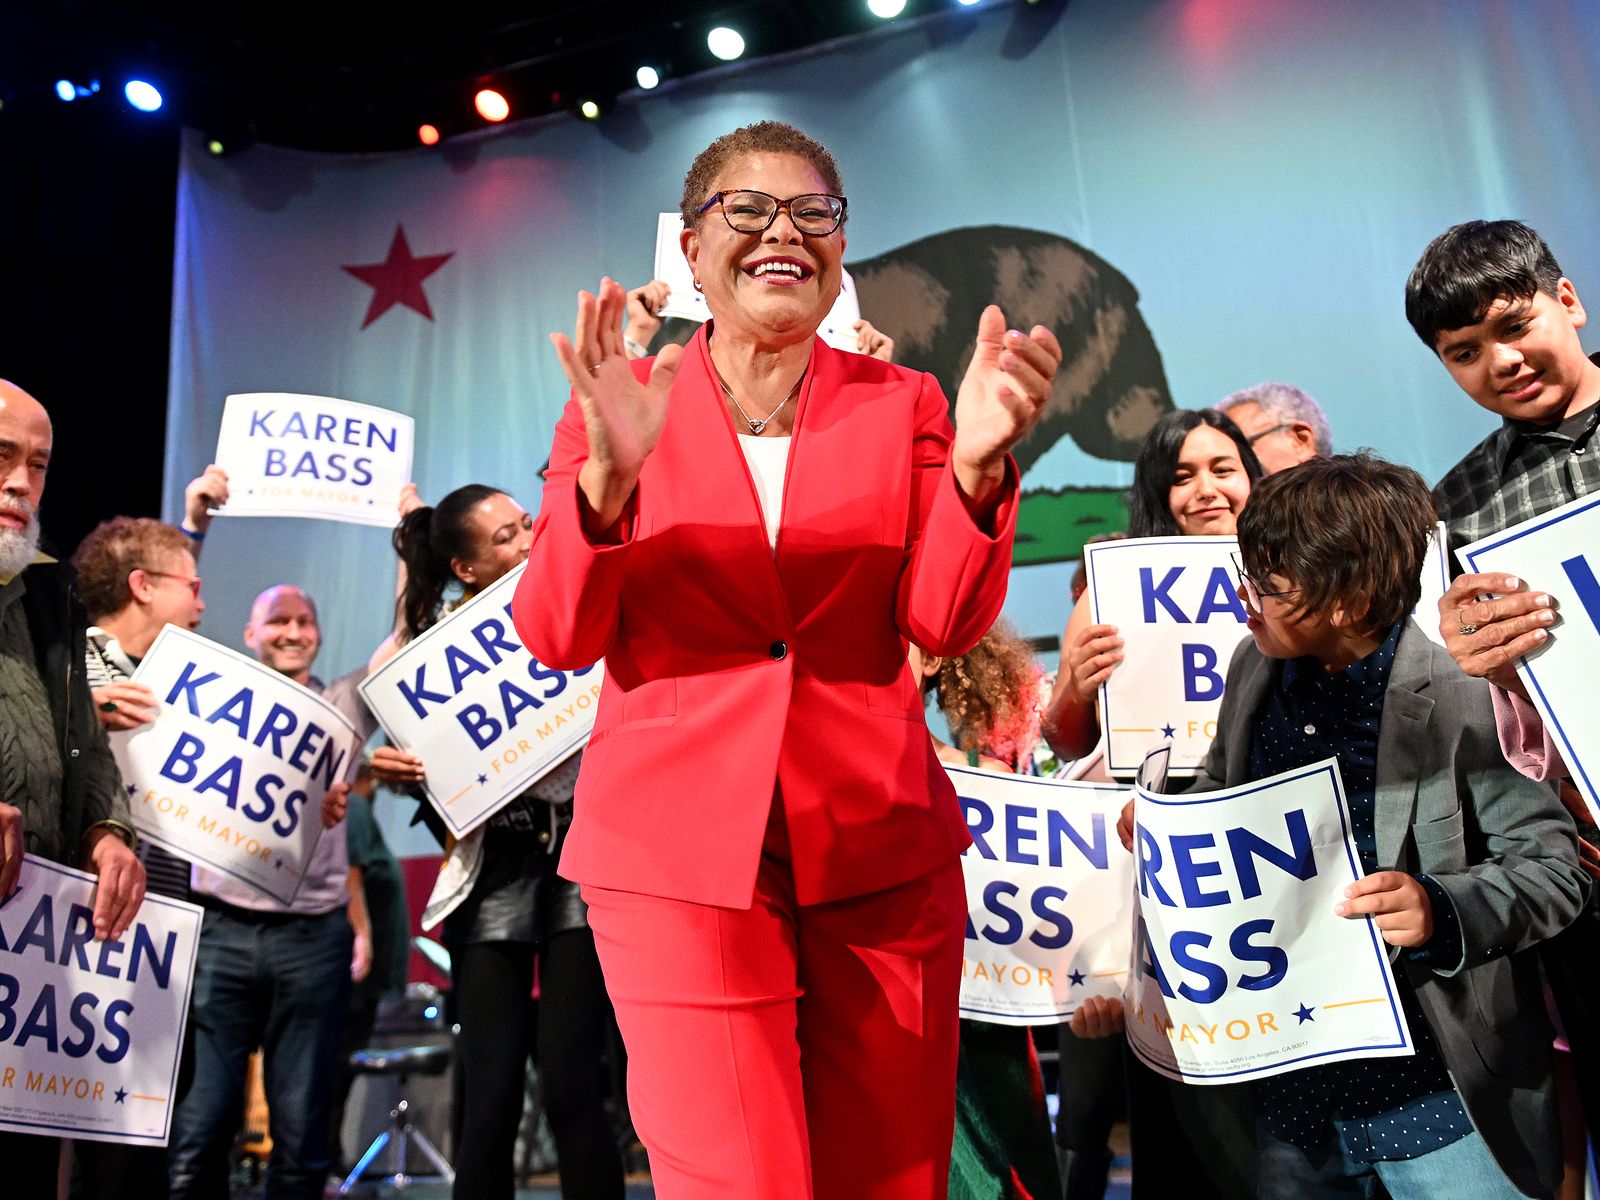 Karen Bass is first woman elected as LA mayor